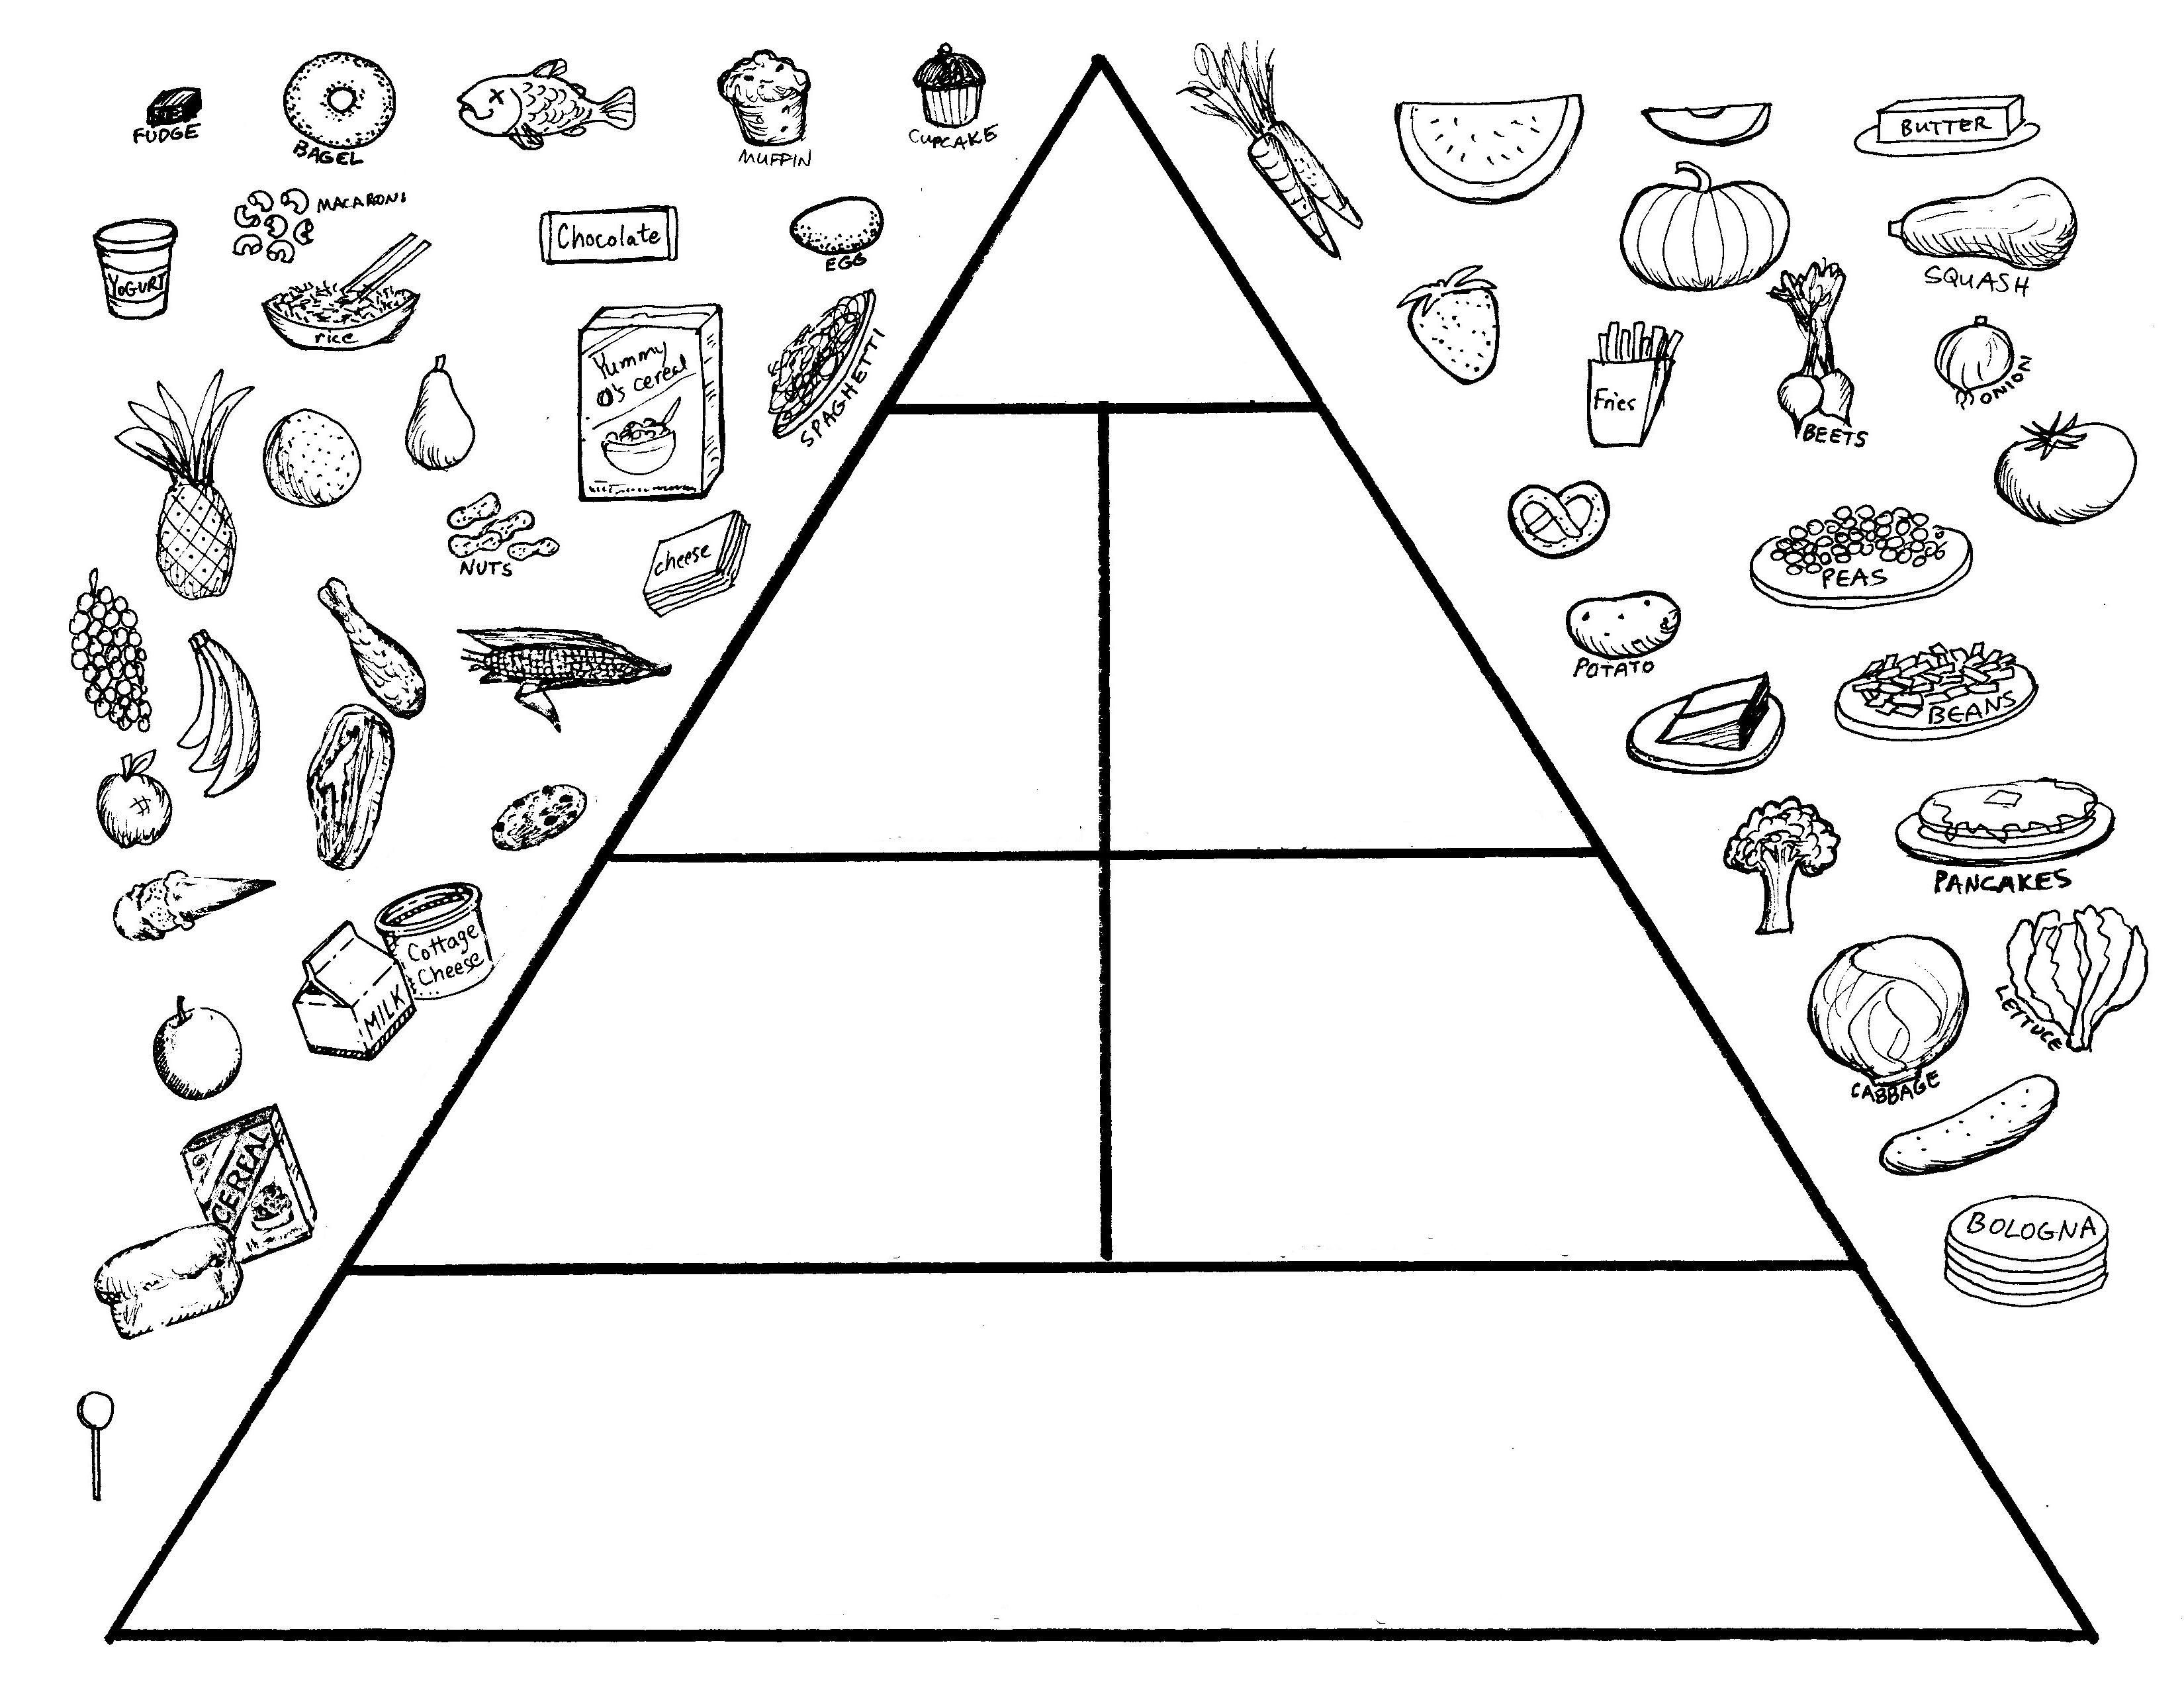 Printable Food Pyramid Activities | Food Pyramid Coloring Pages - Free Printable Food Pyramid